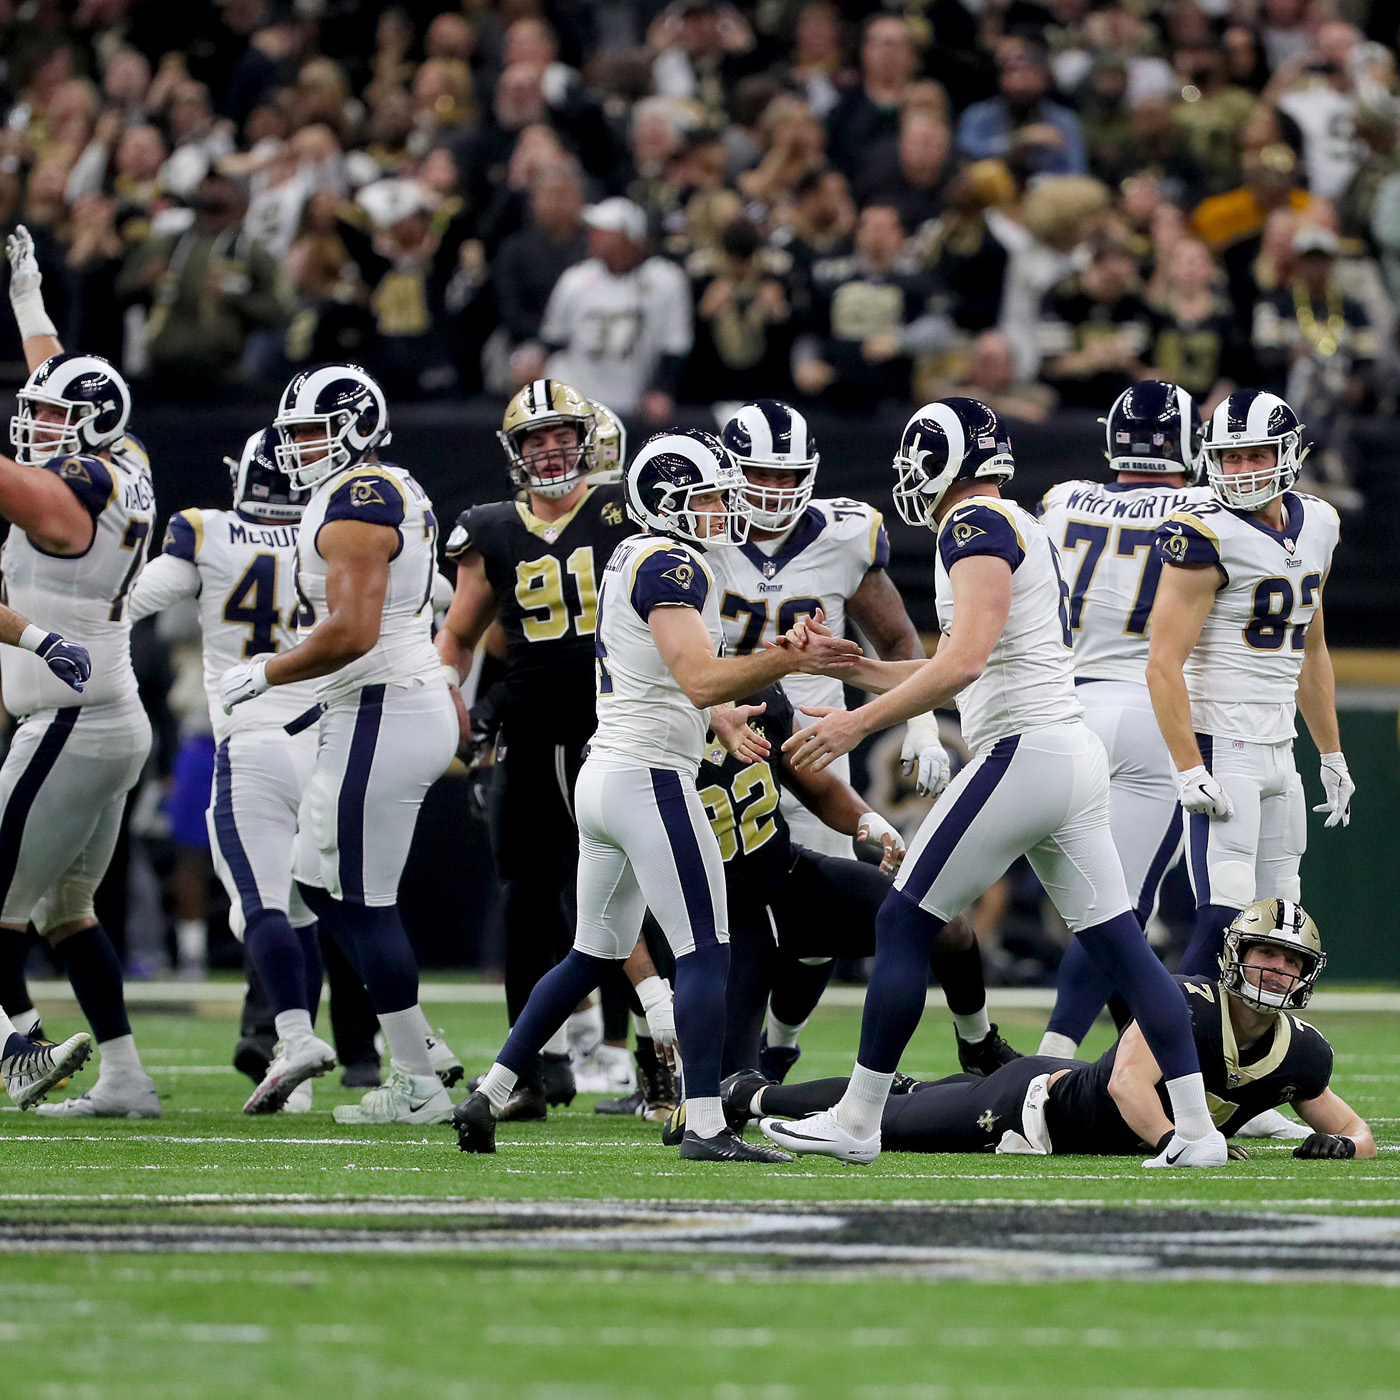 LAR 26-23 Greg Zuerlein hits game-winning field goal to send Rams to the Super Bowl